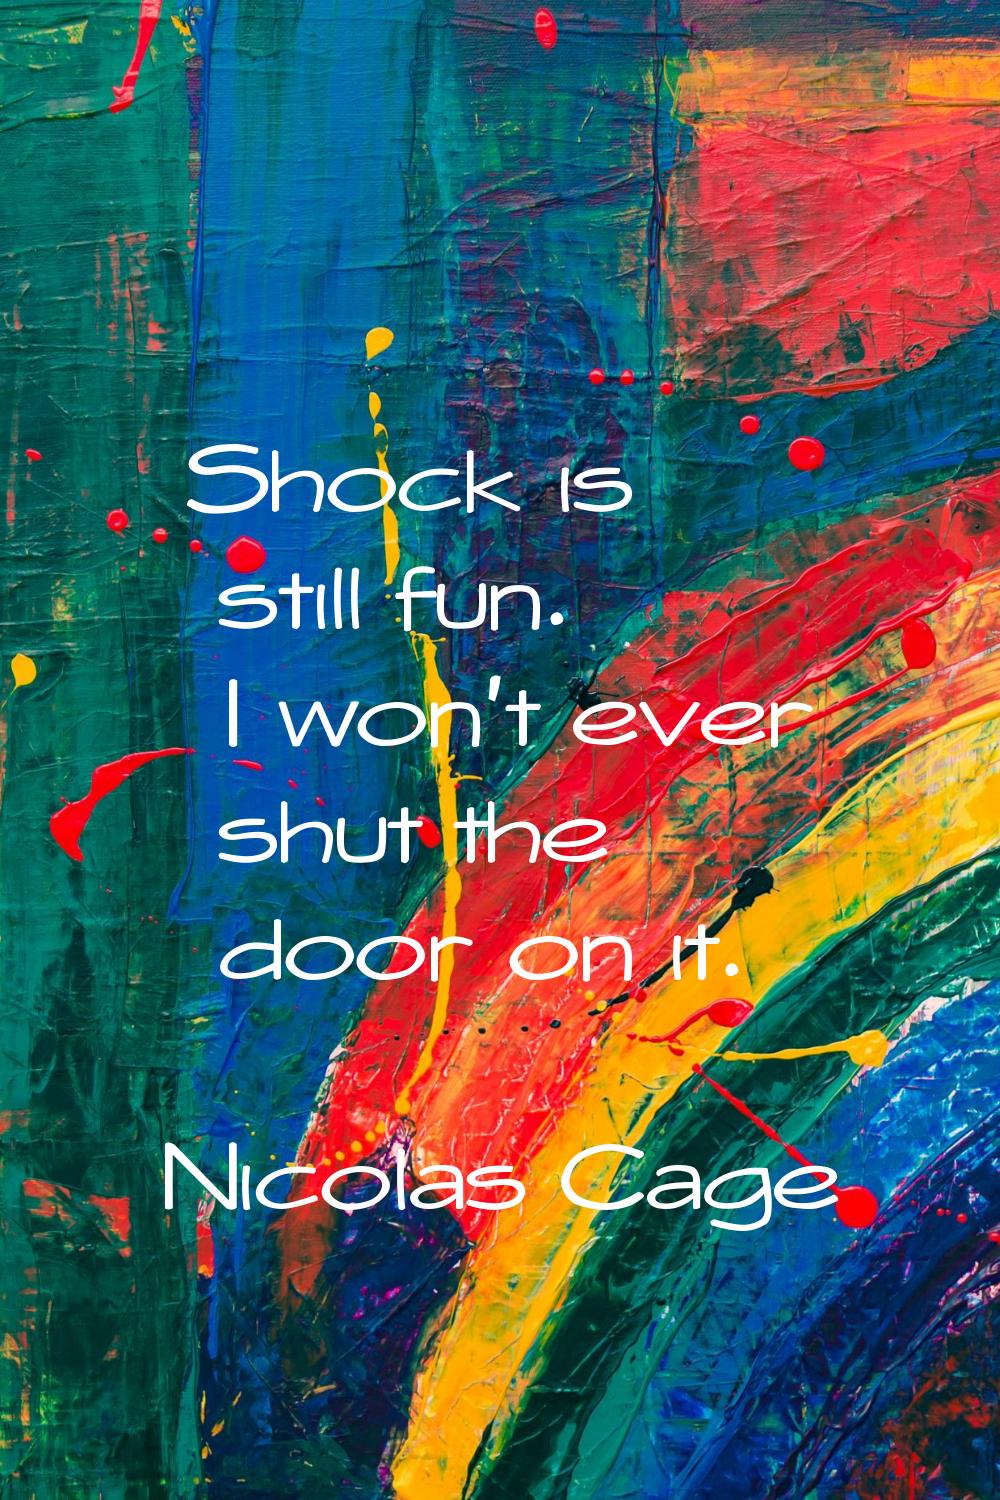 Shock is still fun. I won't ever shut the door on it.